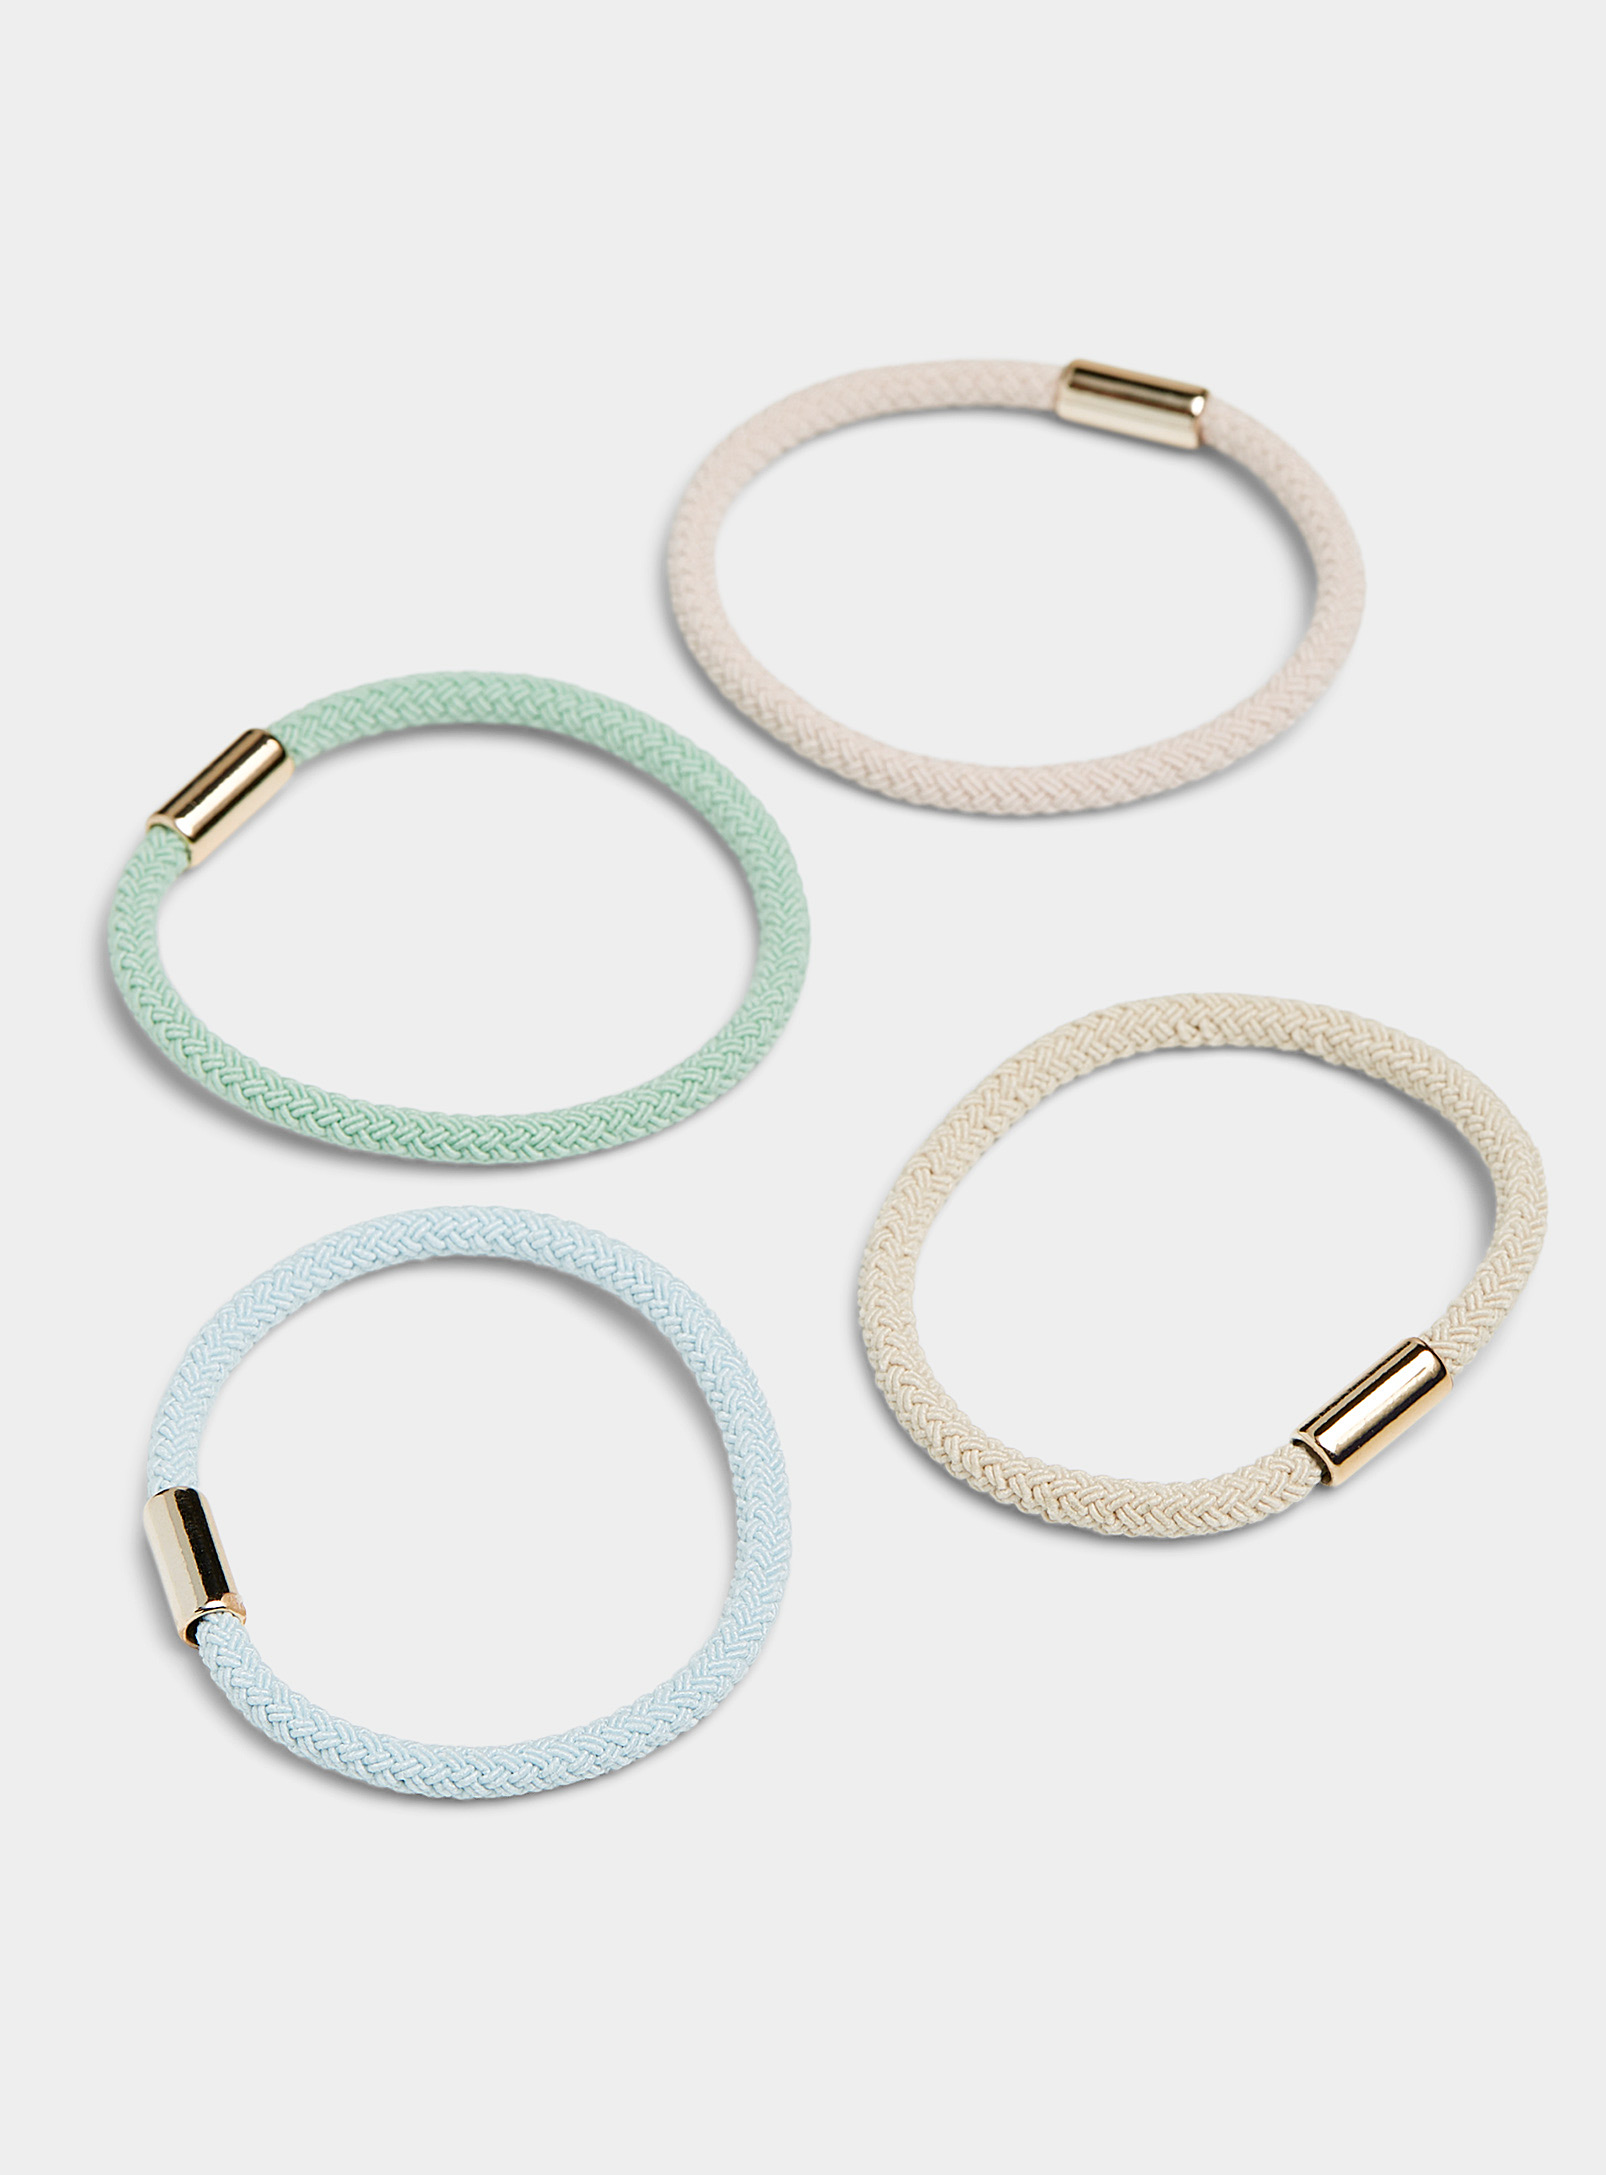 Simons - Women's Pastel braided elastics Set of 4